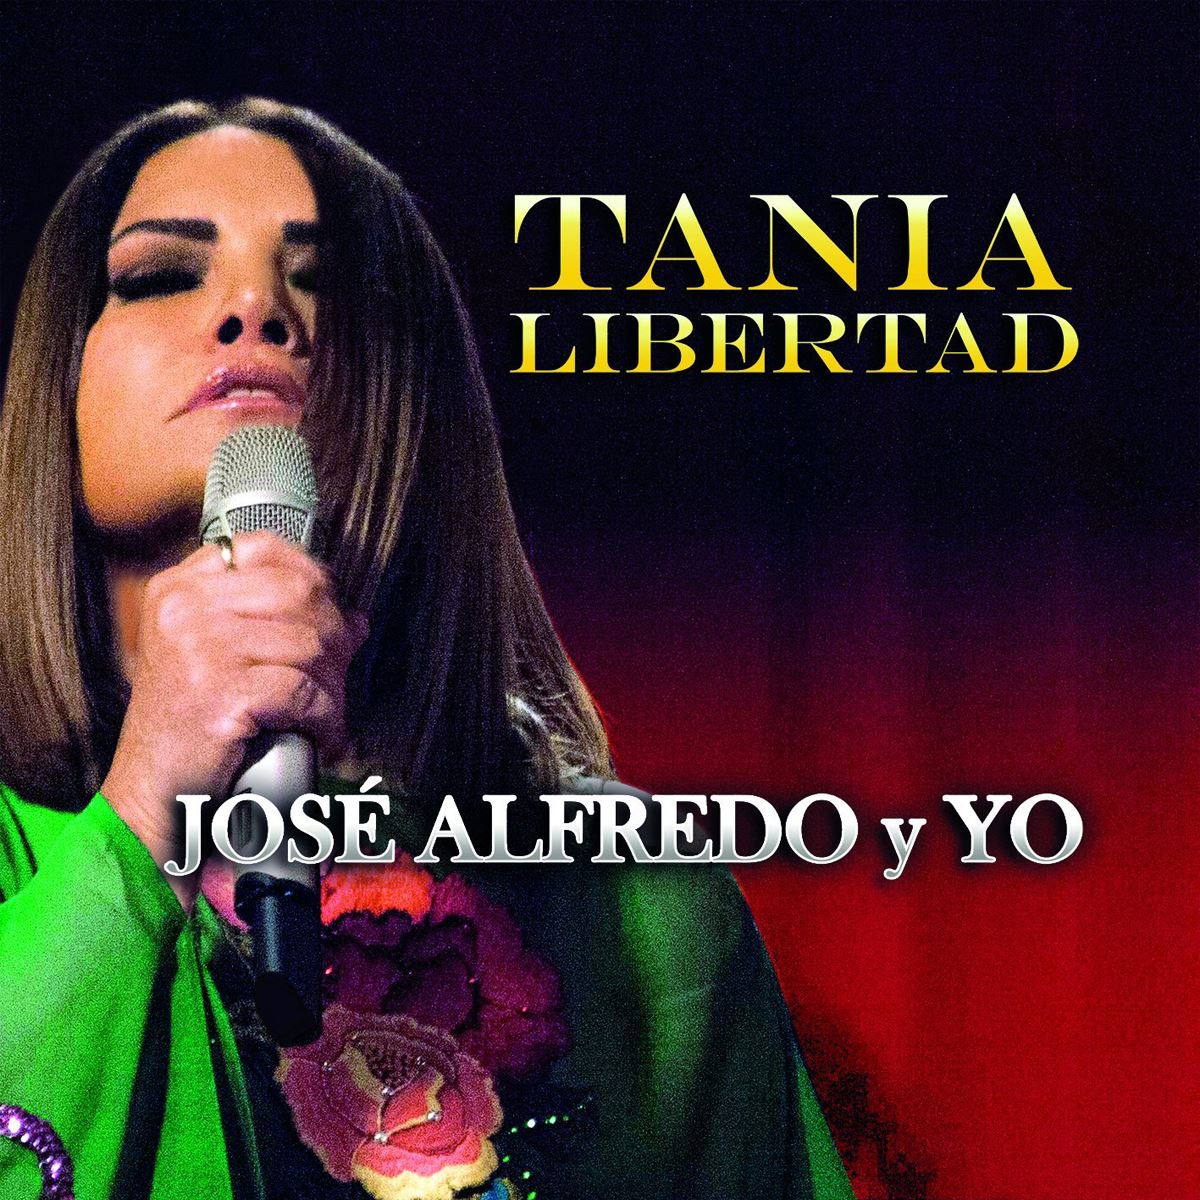 CD/ DVD Tania Libertad José Alfredo y Yo